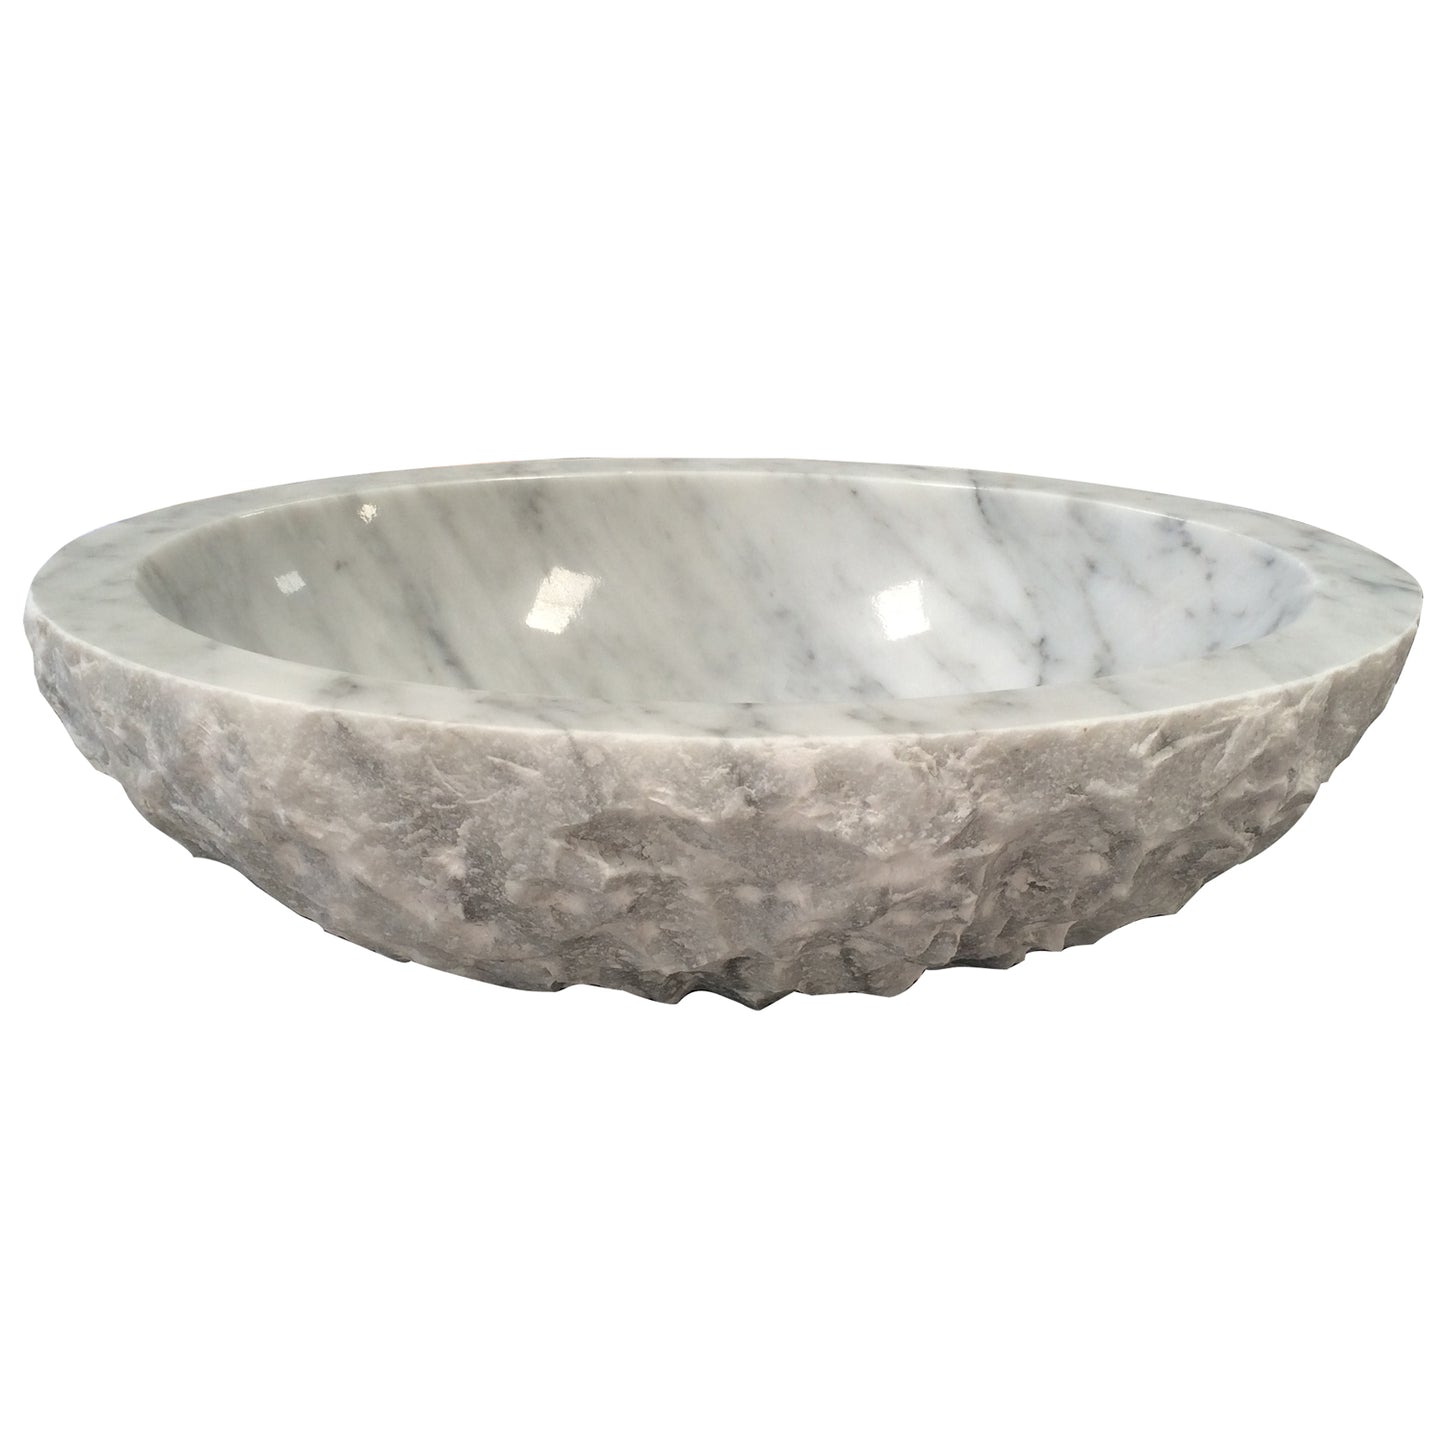 Bonette Vessel Carrara Marble Oval Vessel Sink with Chiseled Finish